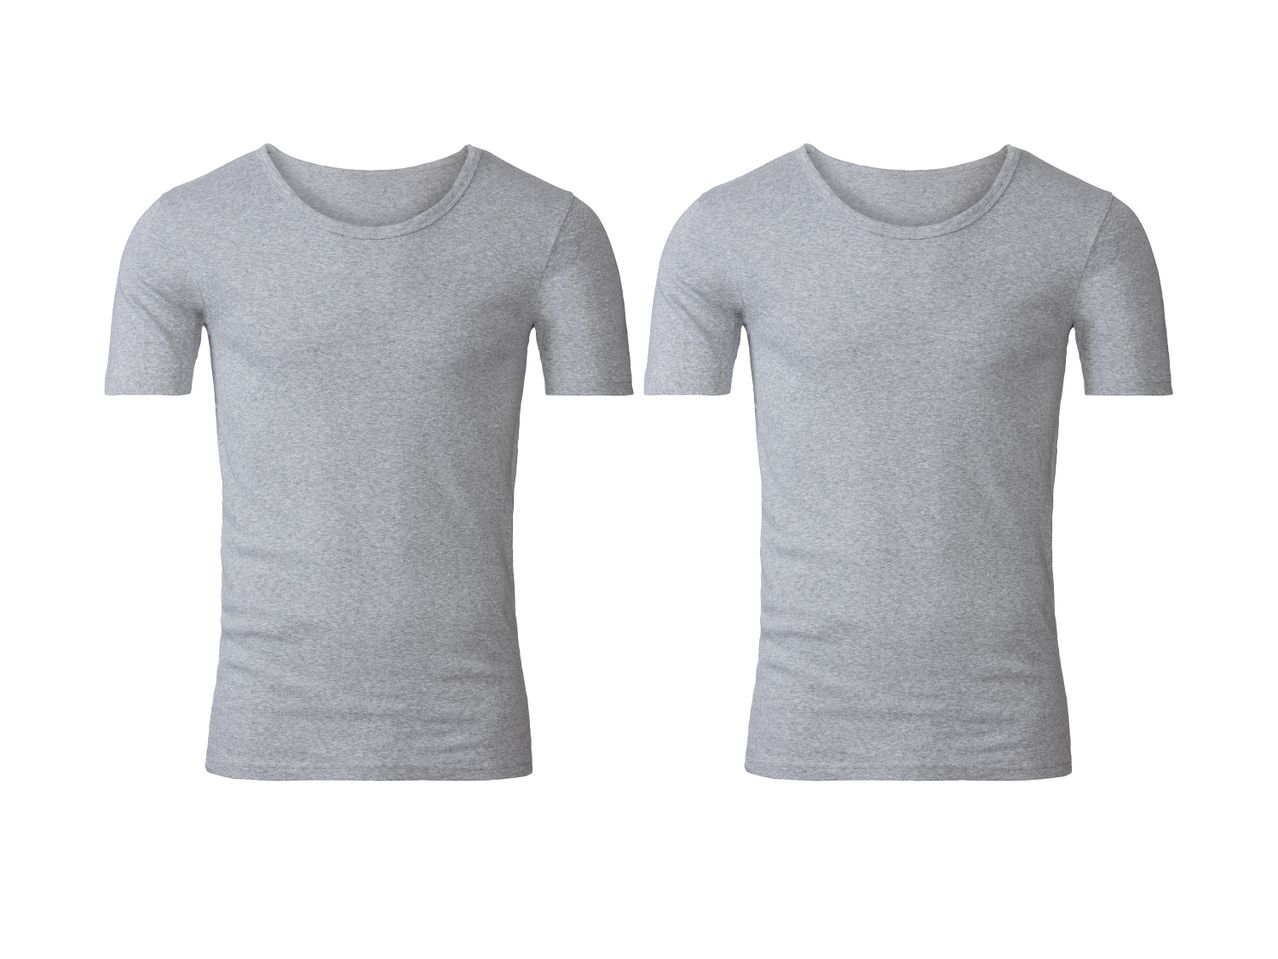 T-Shirt intima da uomo , prezzo 8.99 EUR 
T-Shirt intima da uomo 2 pezzi, Misure: ...